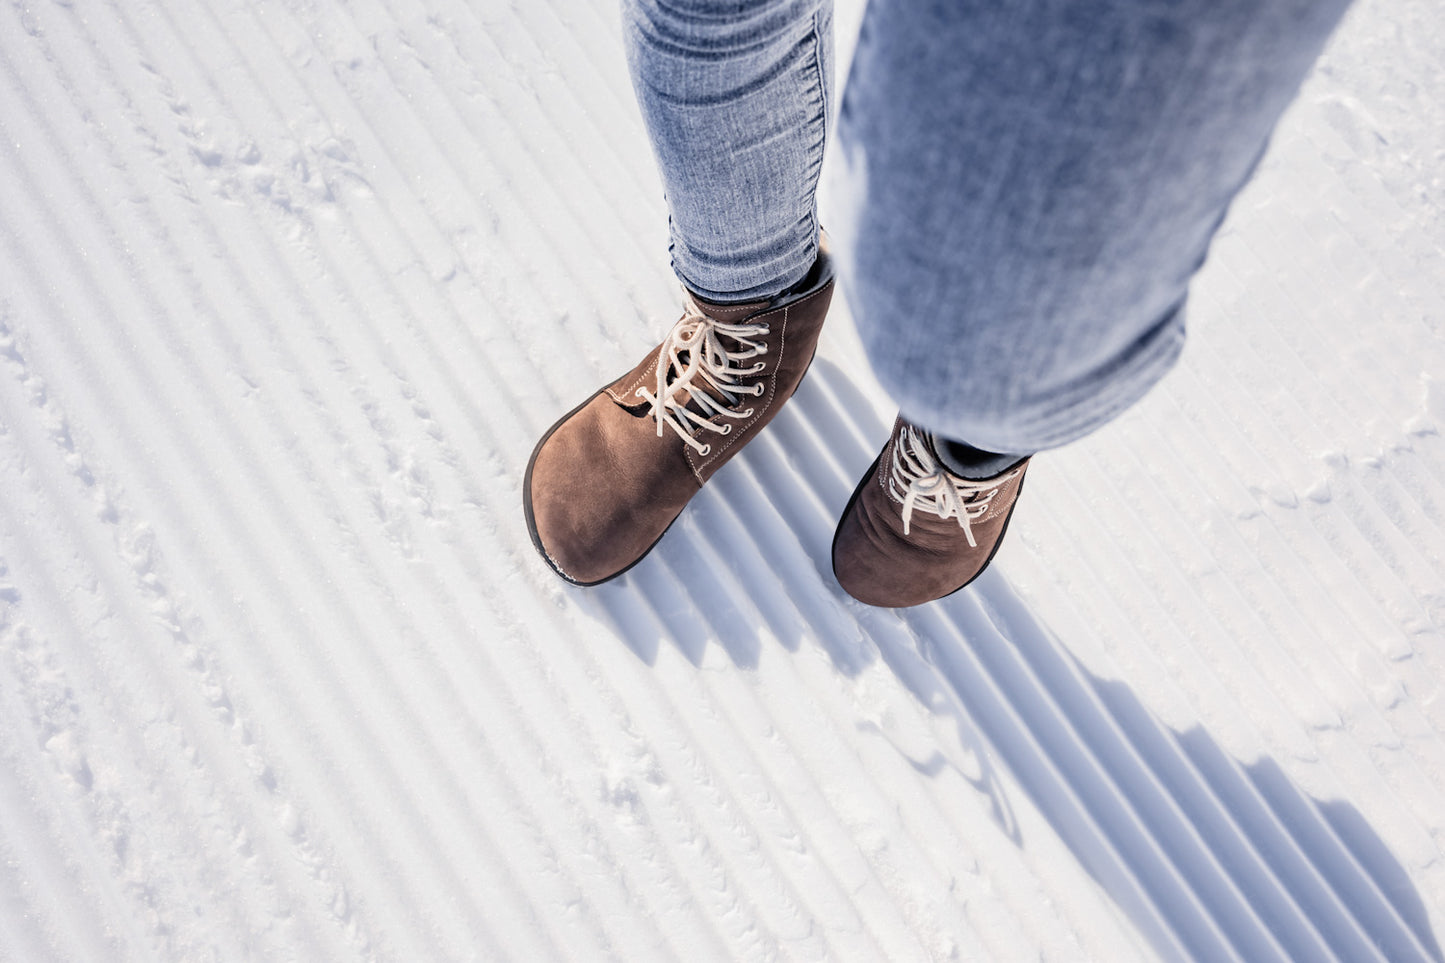 Be Lenka Winter 3.0 Barefoot Boots - Chocolate